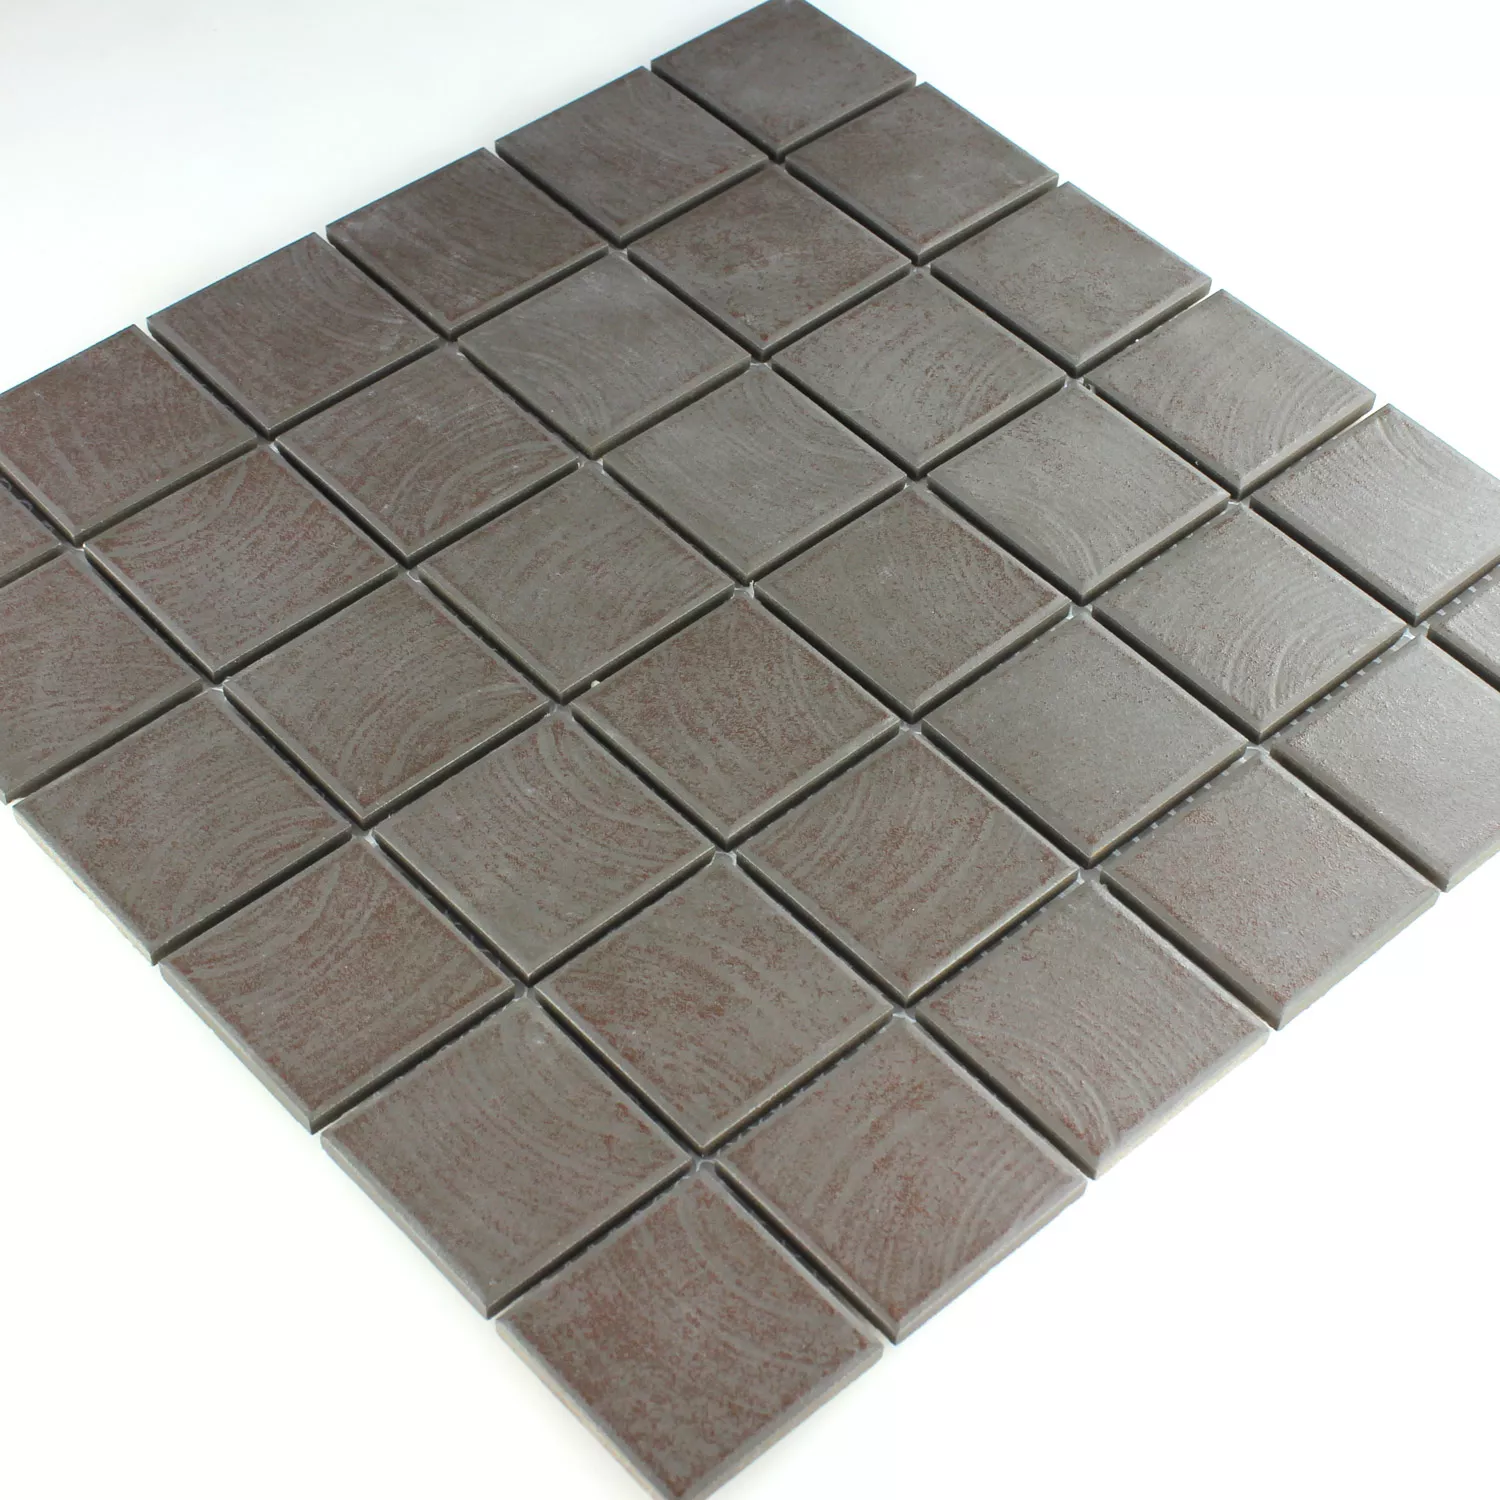 Sample Mosaic Tiles Ceramic Non Slip Brown Structured